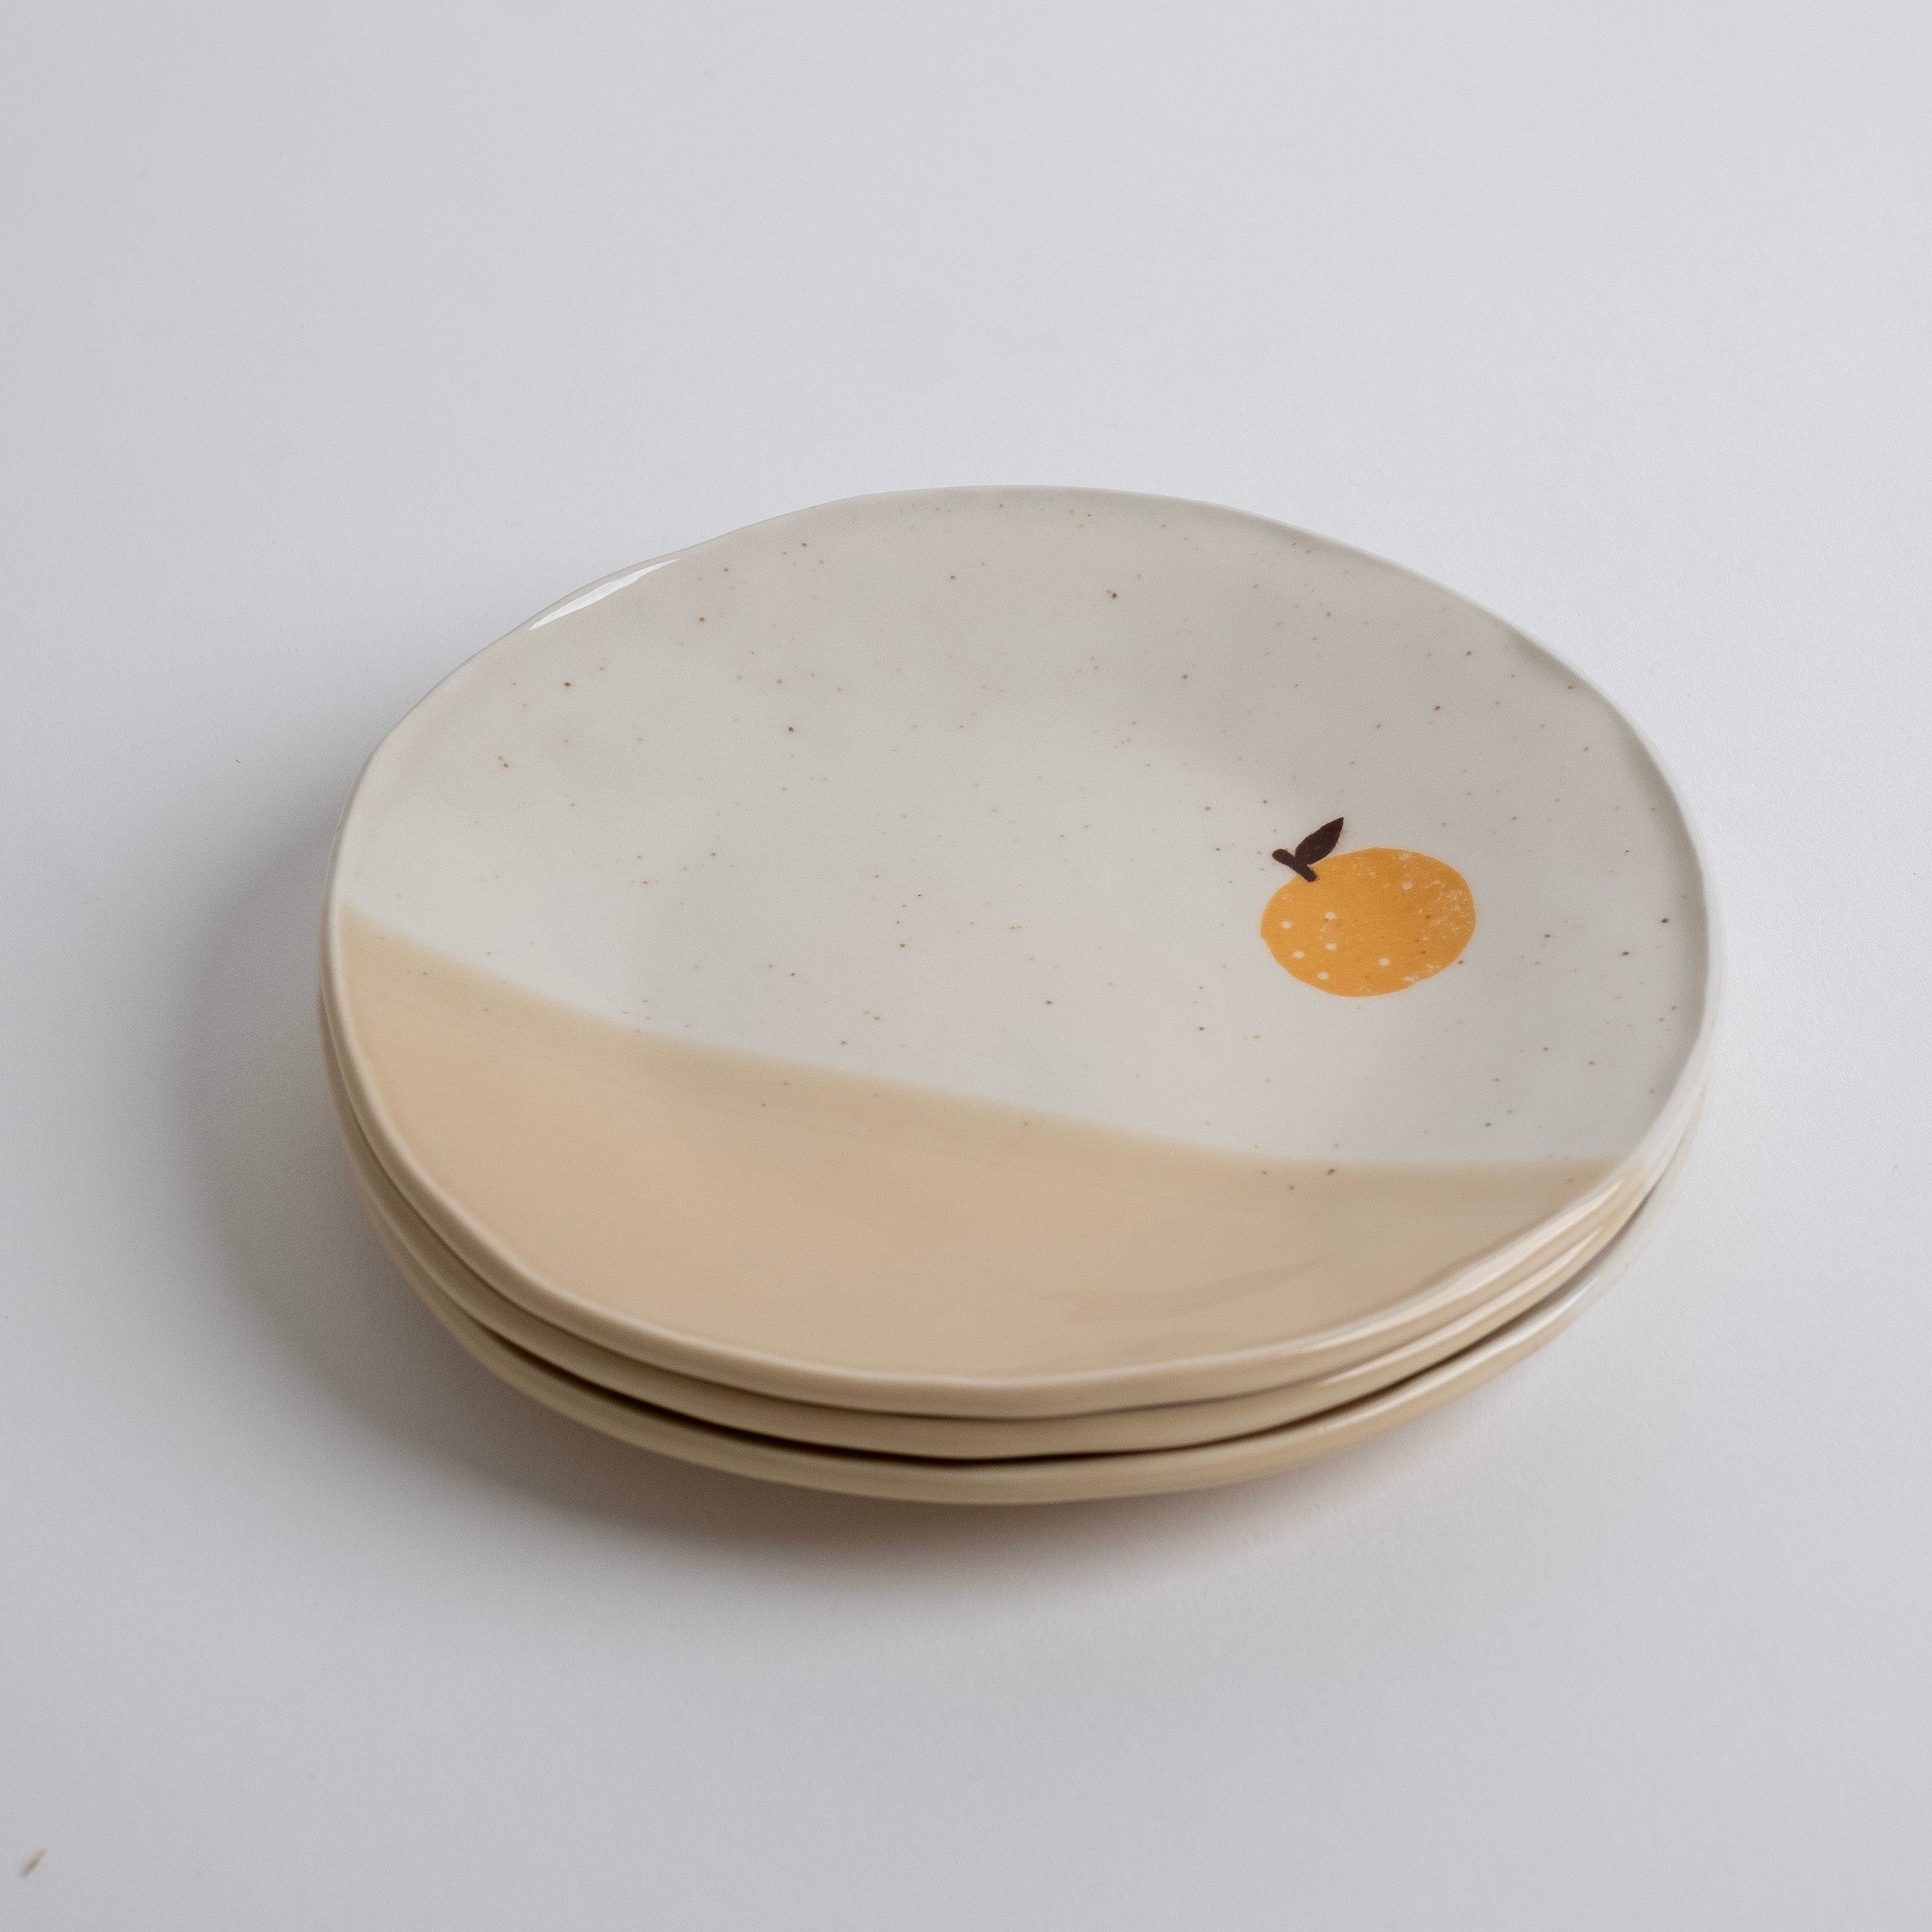 Izawa Small Plate 17cm - Yuzu